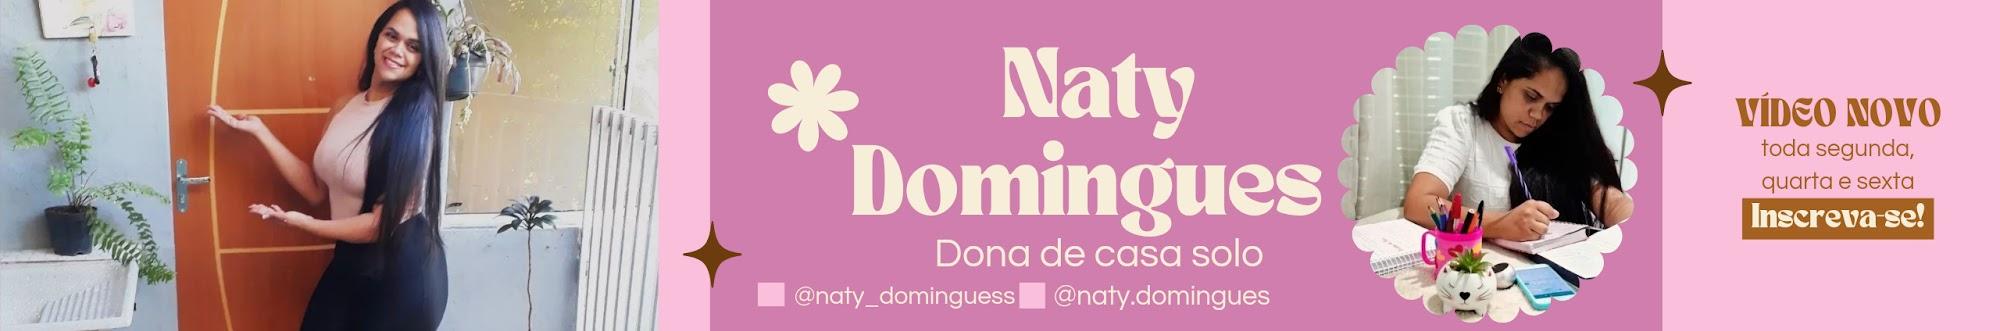 Naty Domingues 